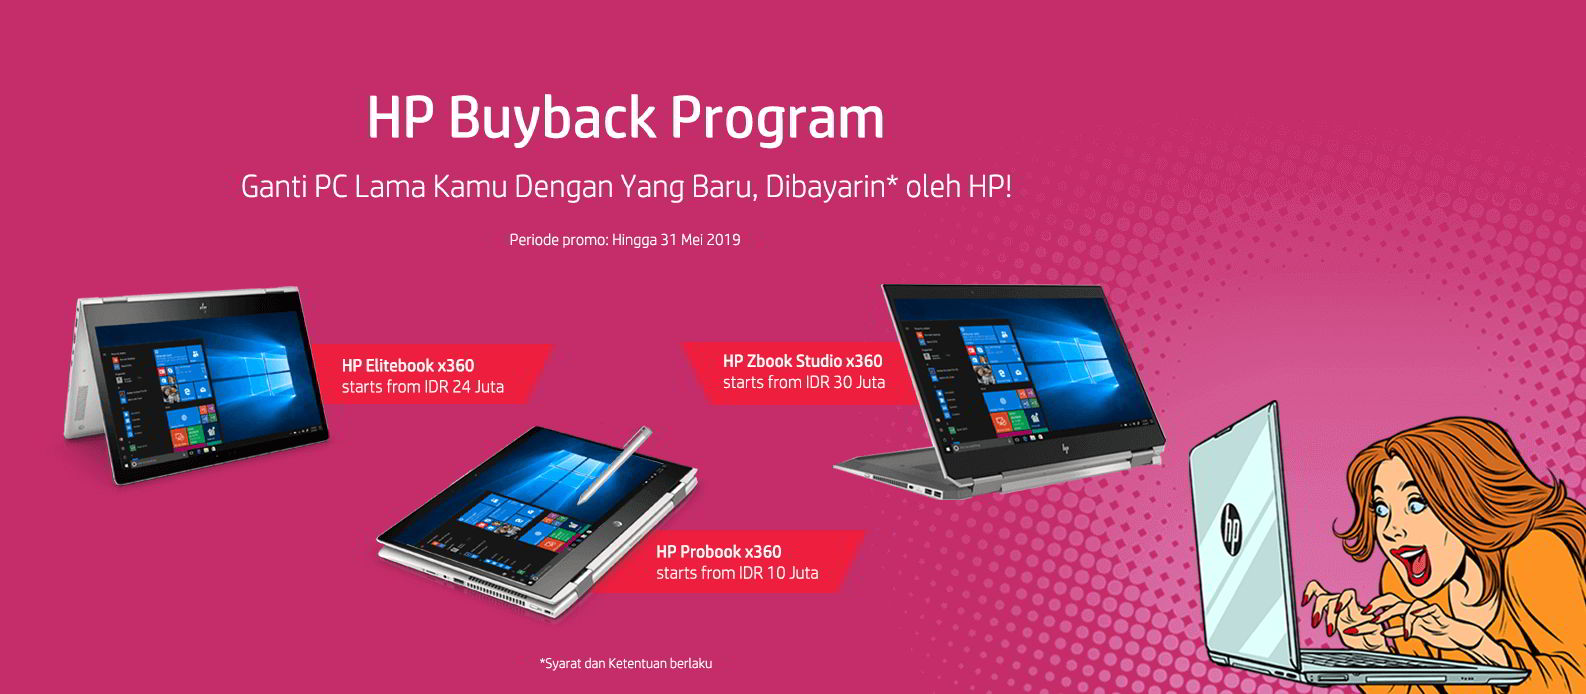 HP BuyBack Program 2019